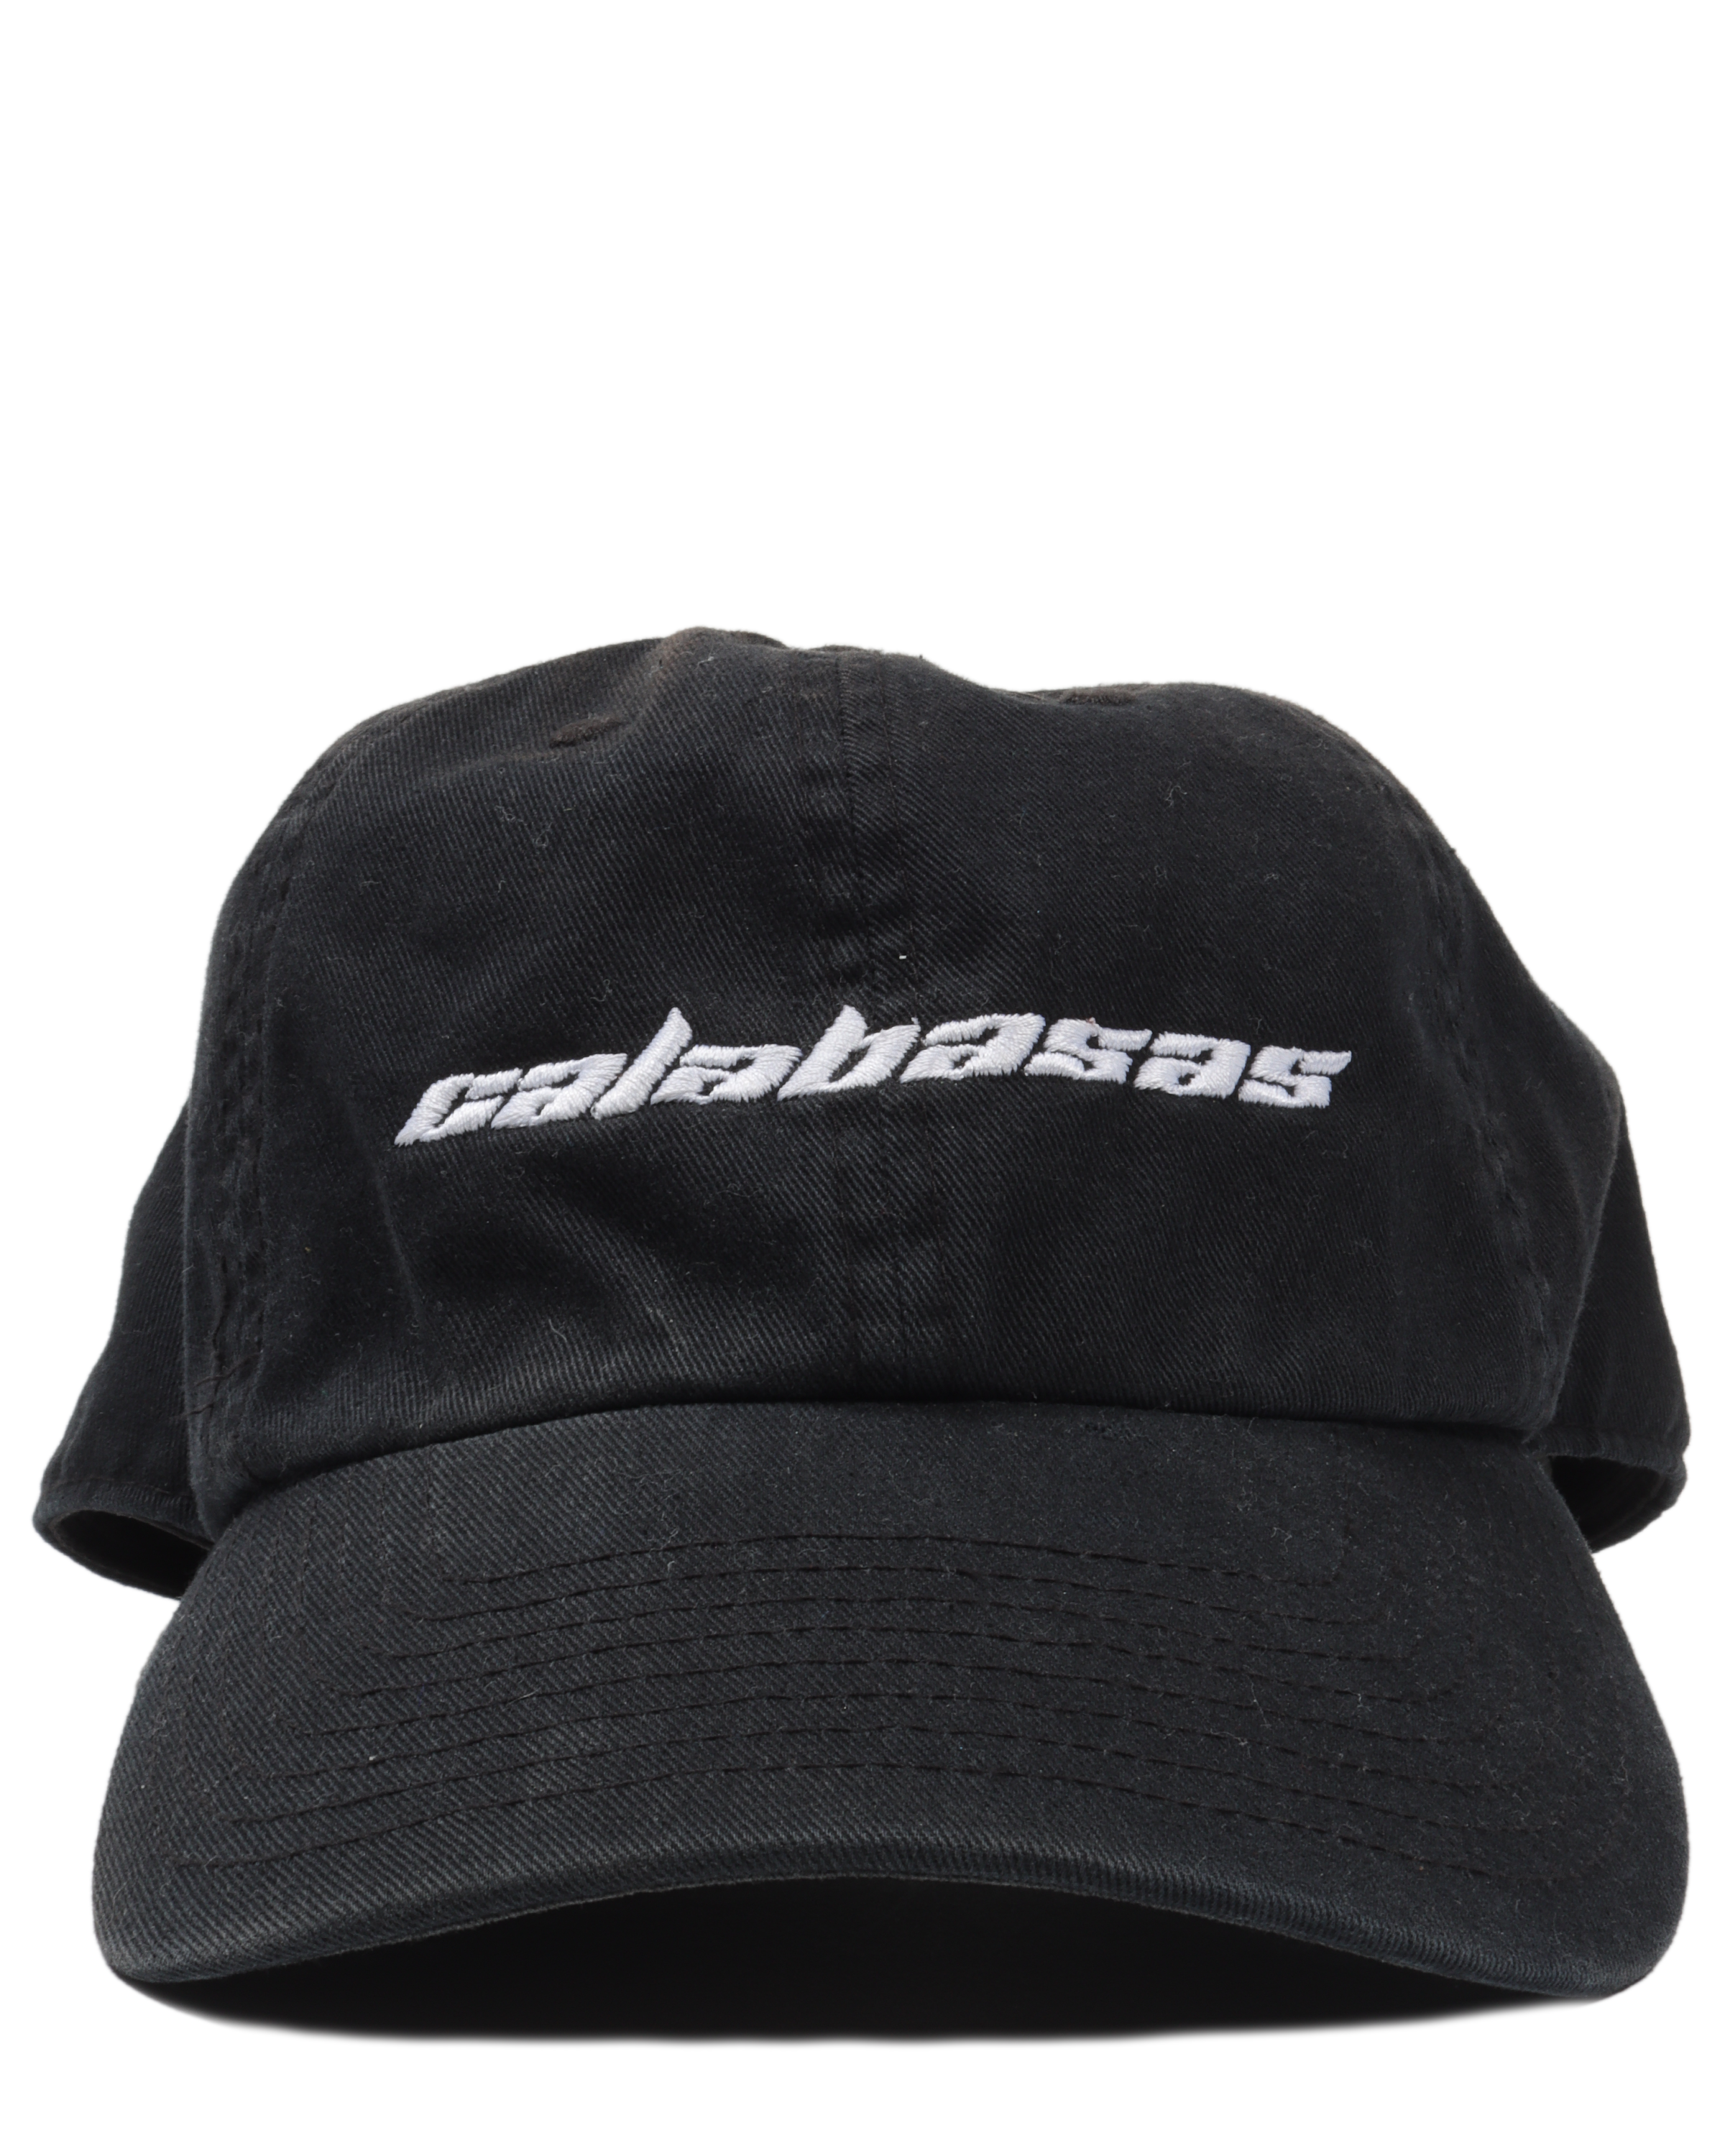 Adidas "Calabasas" Hat